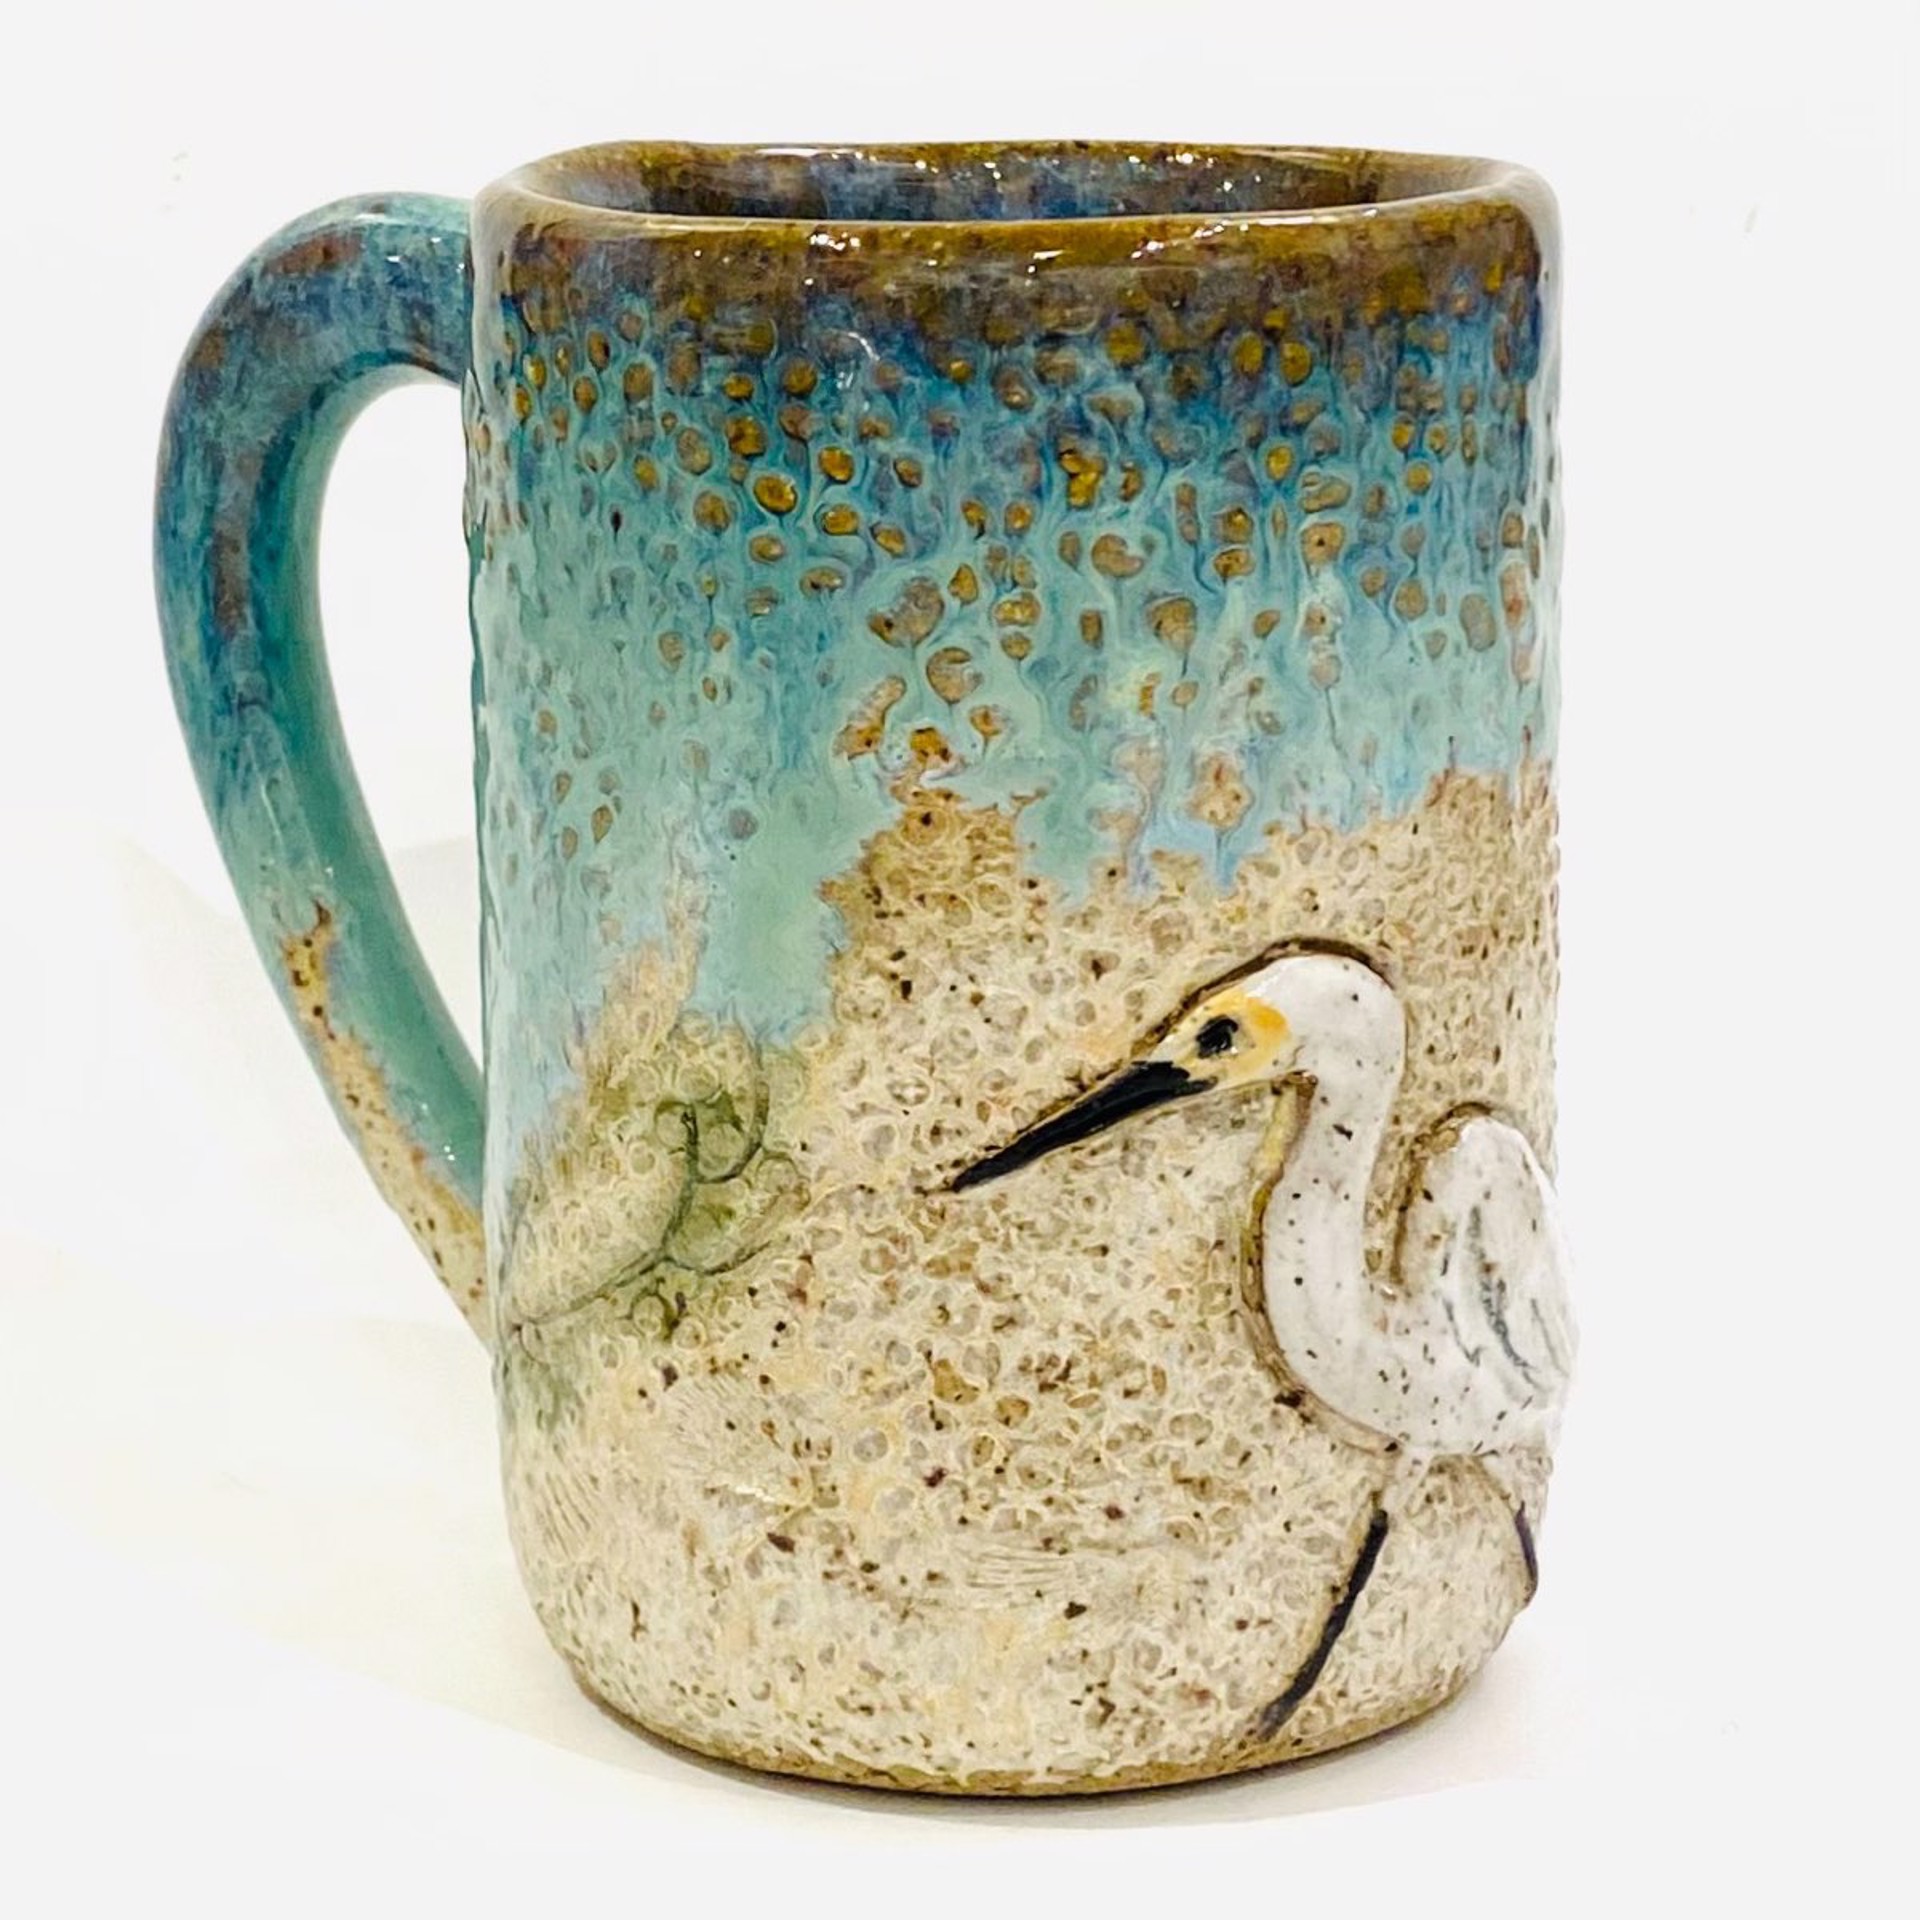 Logan22-861 Mug with Heron (Teal Green Glaze) by Jim & Steffi Logan